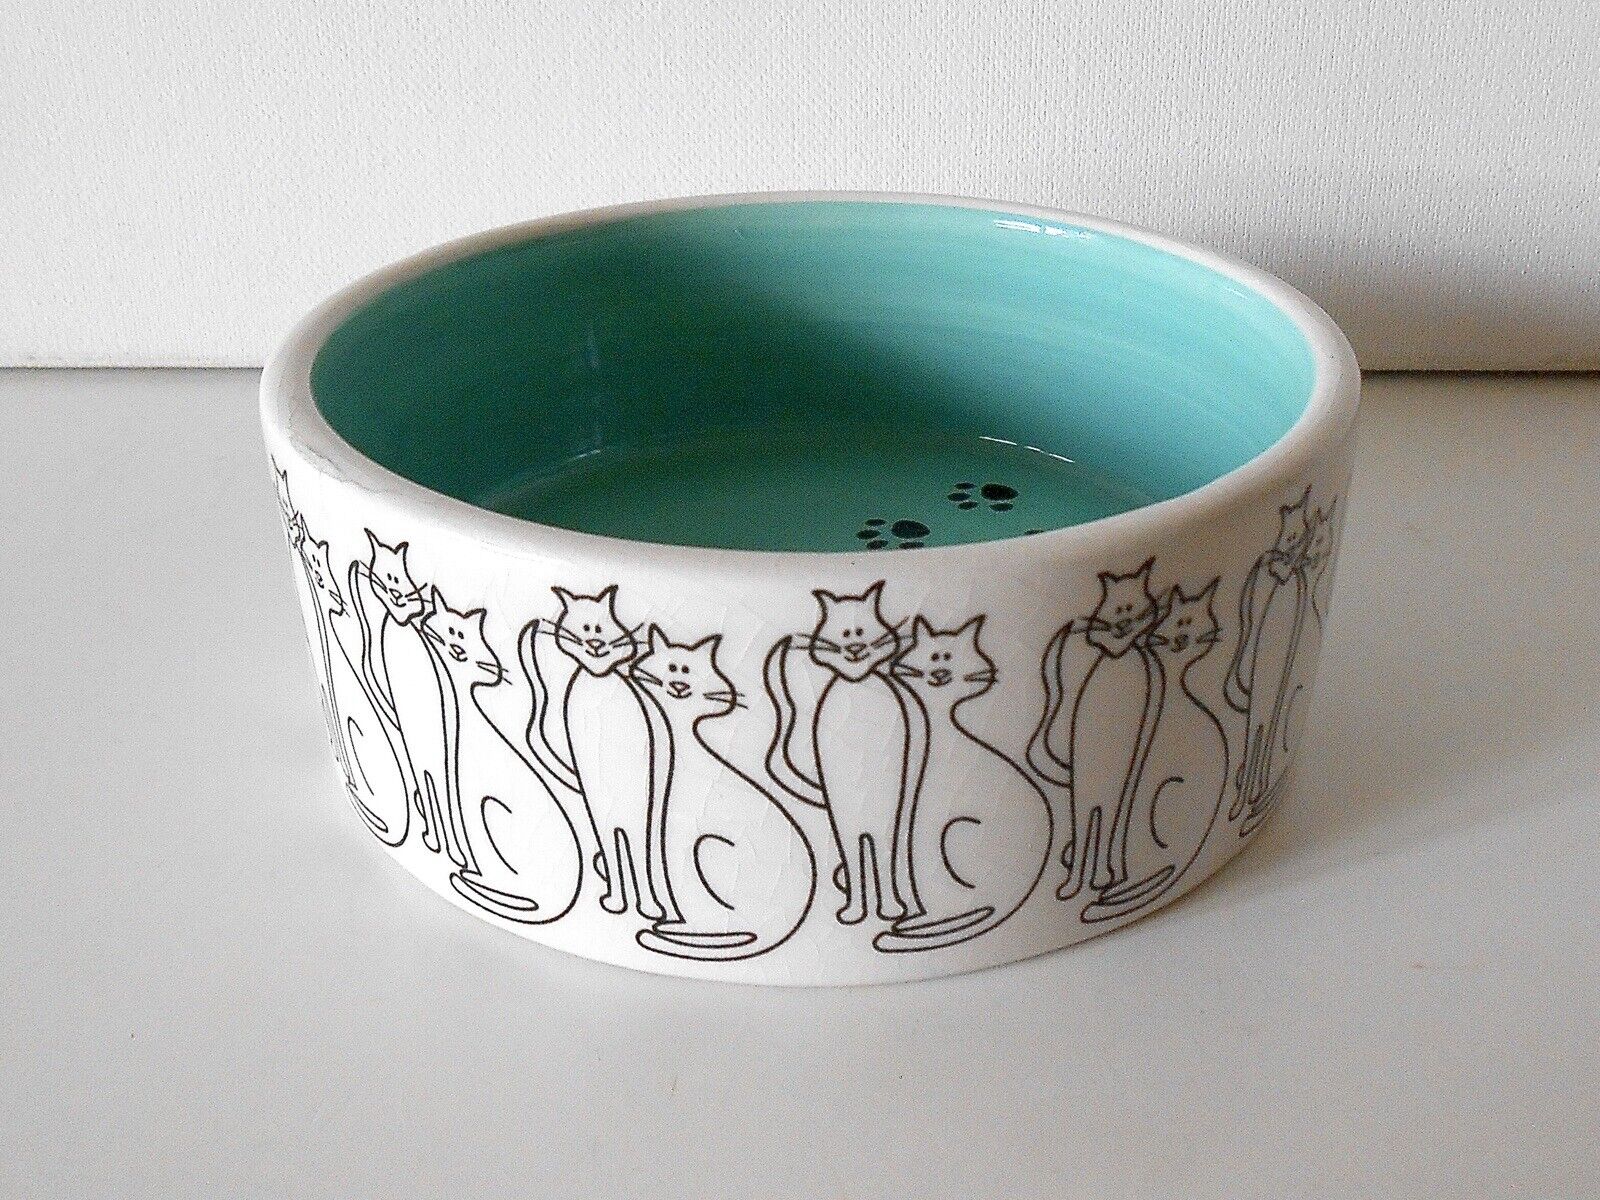 Buchwaldt & Bentzen Denmark Handpainted Cat Bowl Danish Modern Art Pottery Bowl